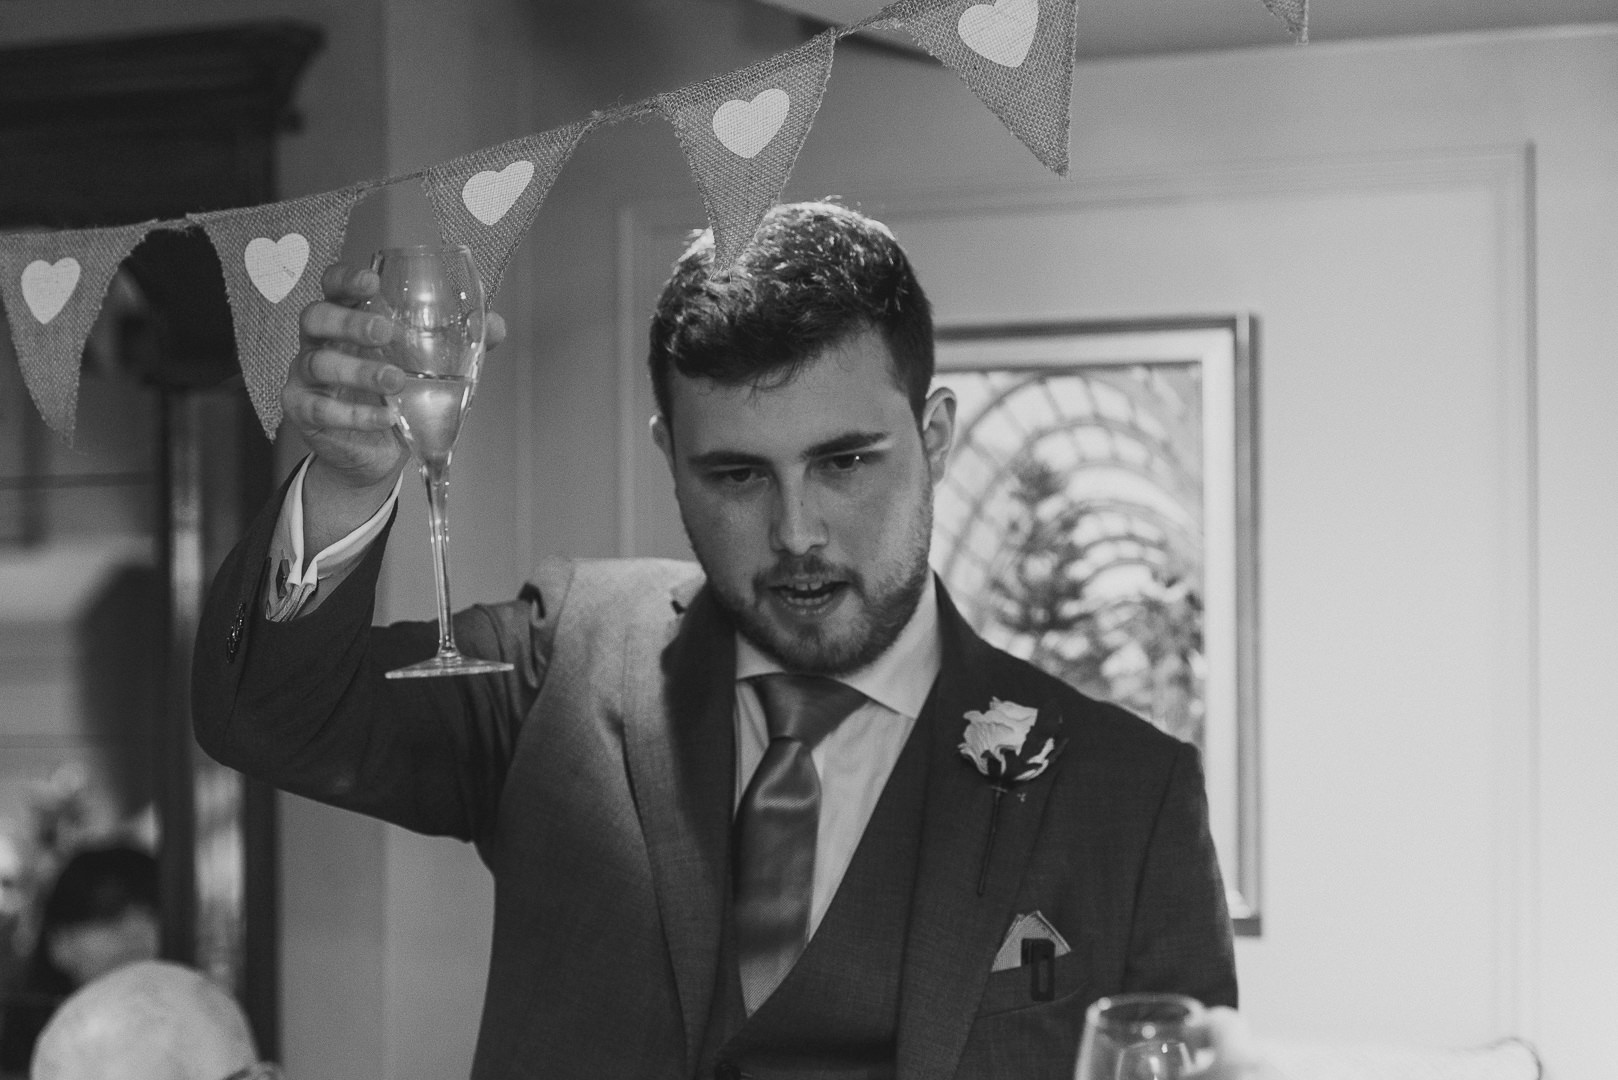 the groom raises his glass